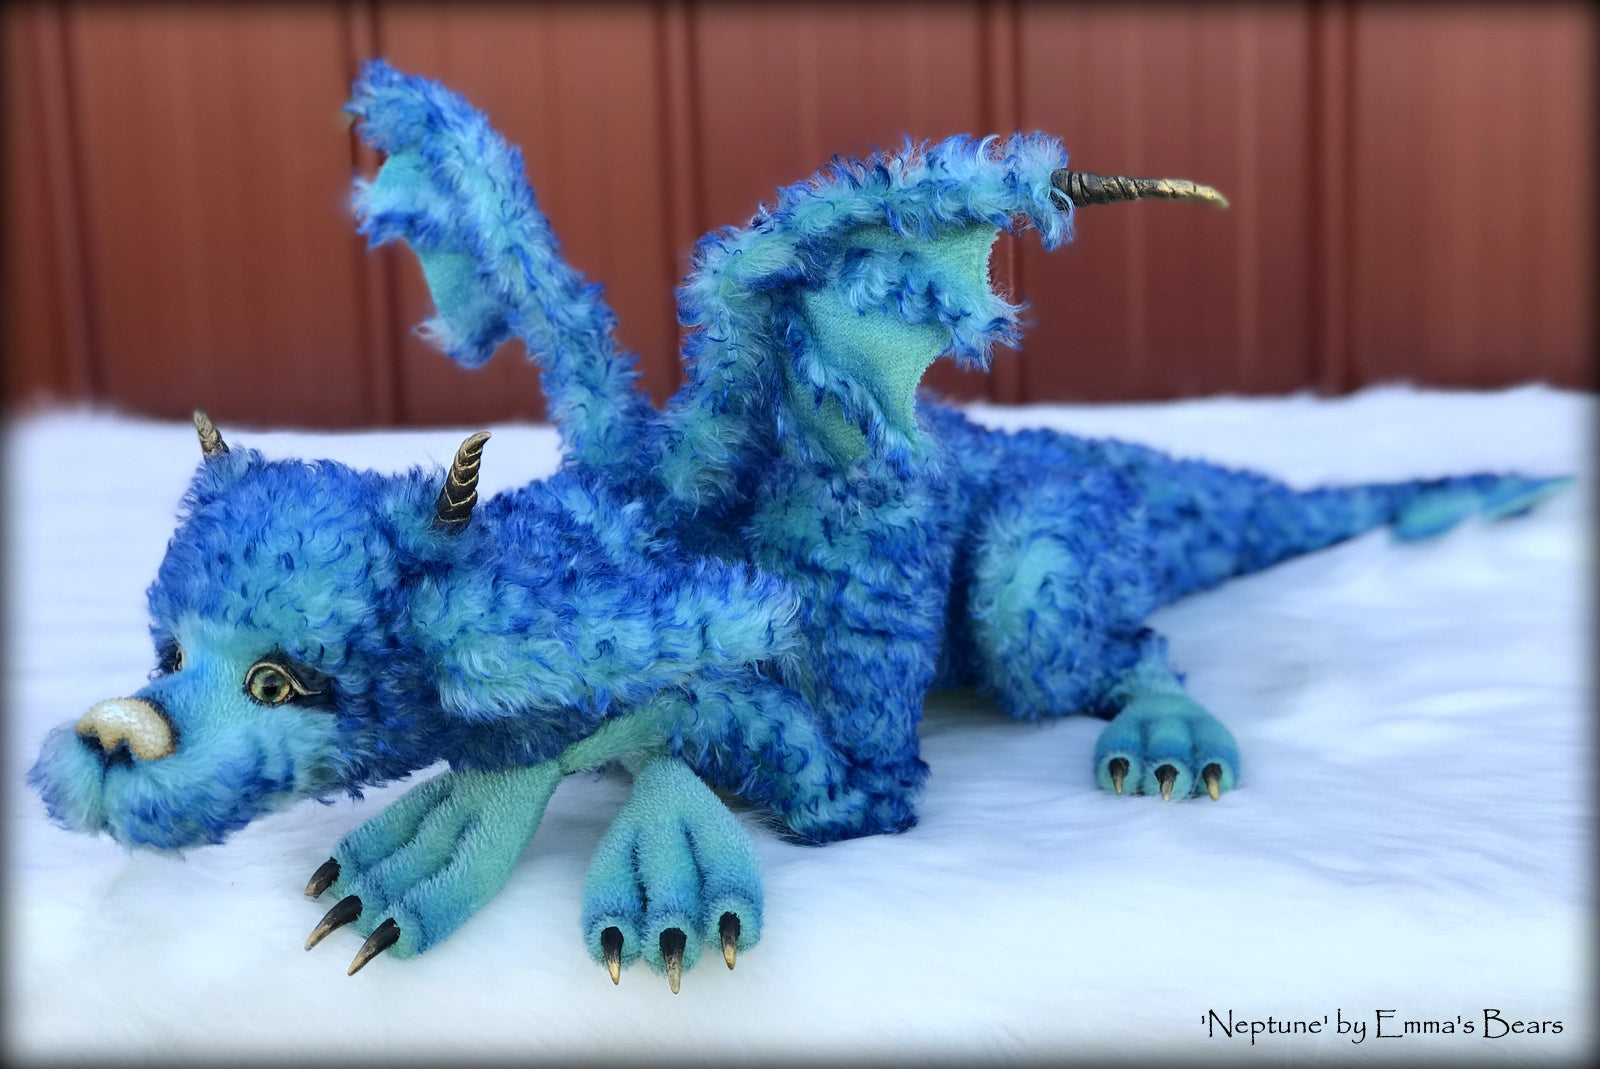 Neptune Dragon - 37" kid mohair dragon soft sculpture - OOAK by Emma's Bears